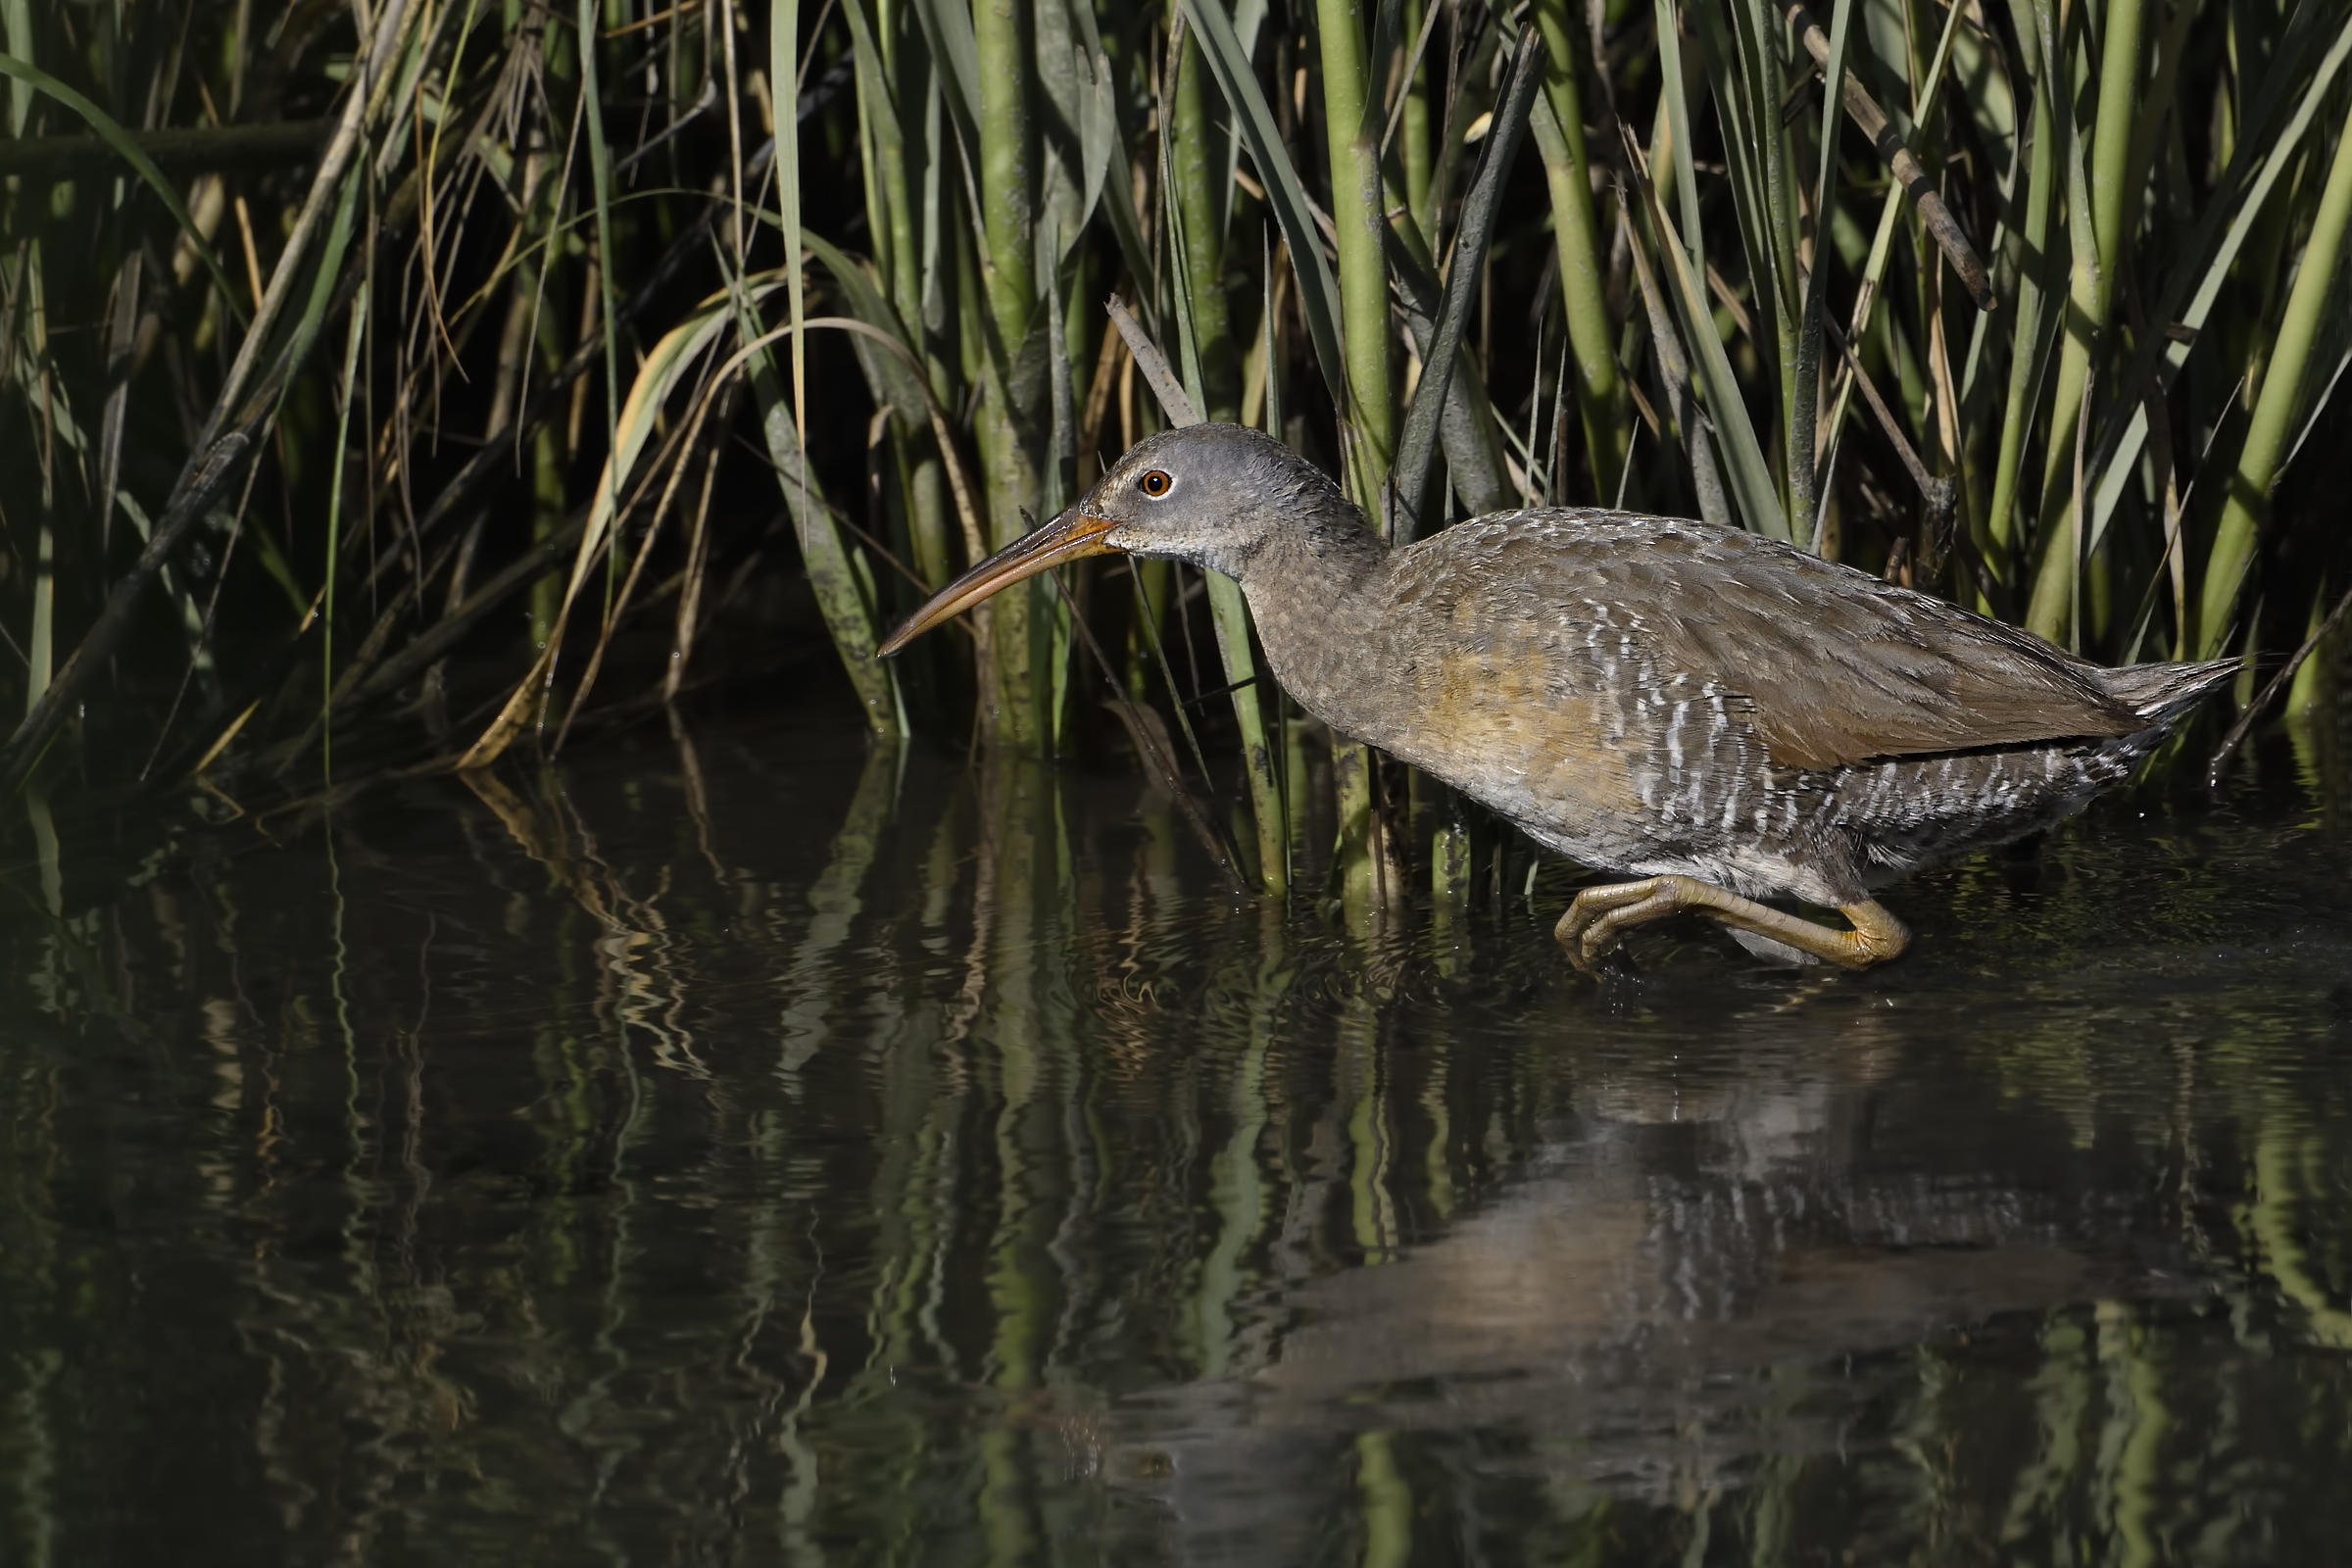 A marsh bird stalking through the reeds.